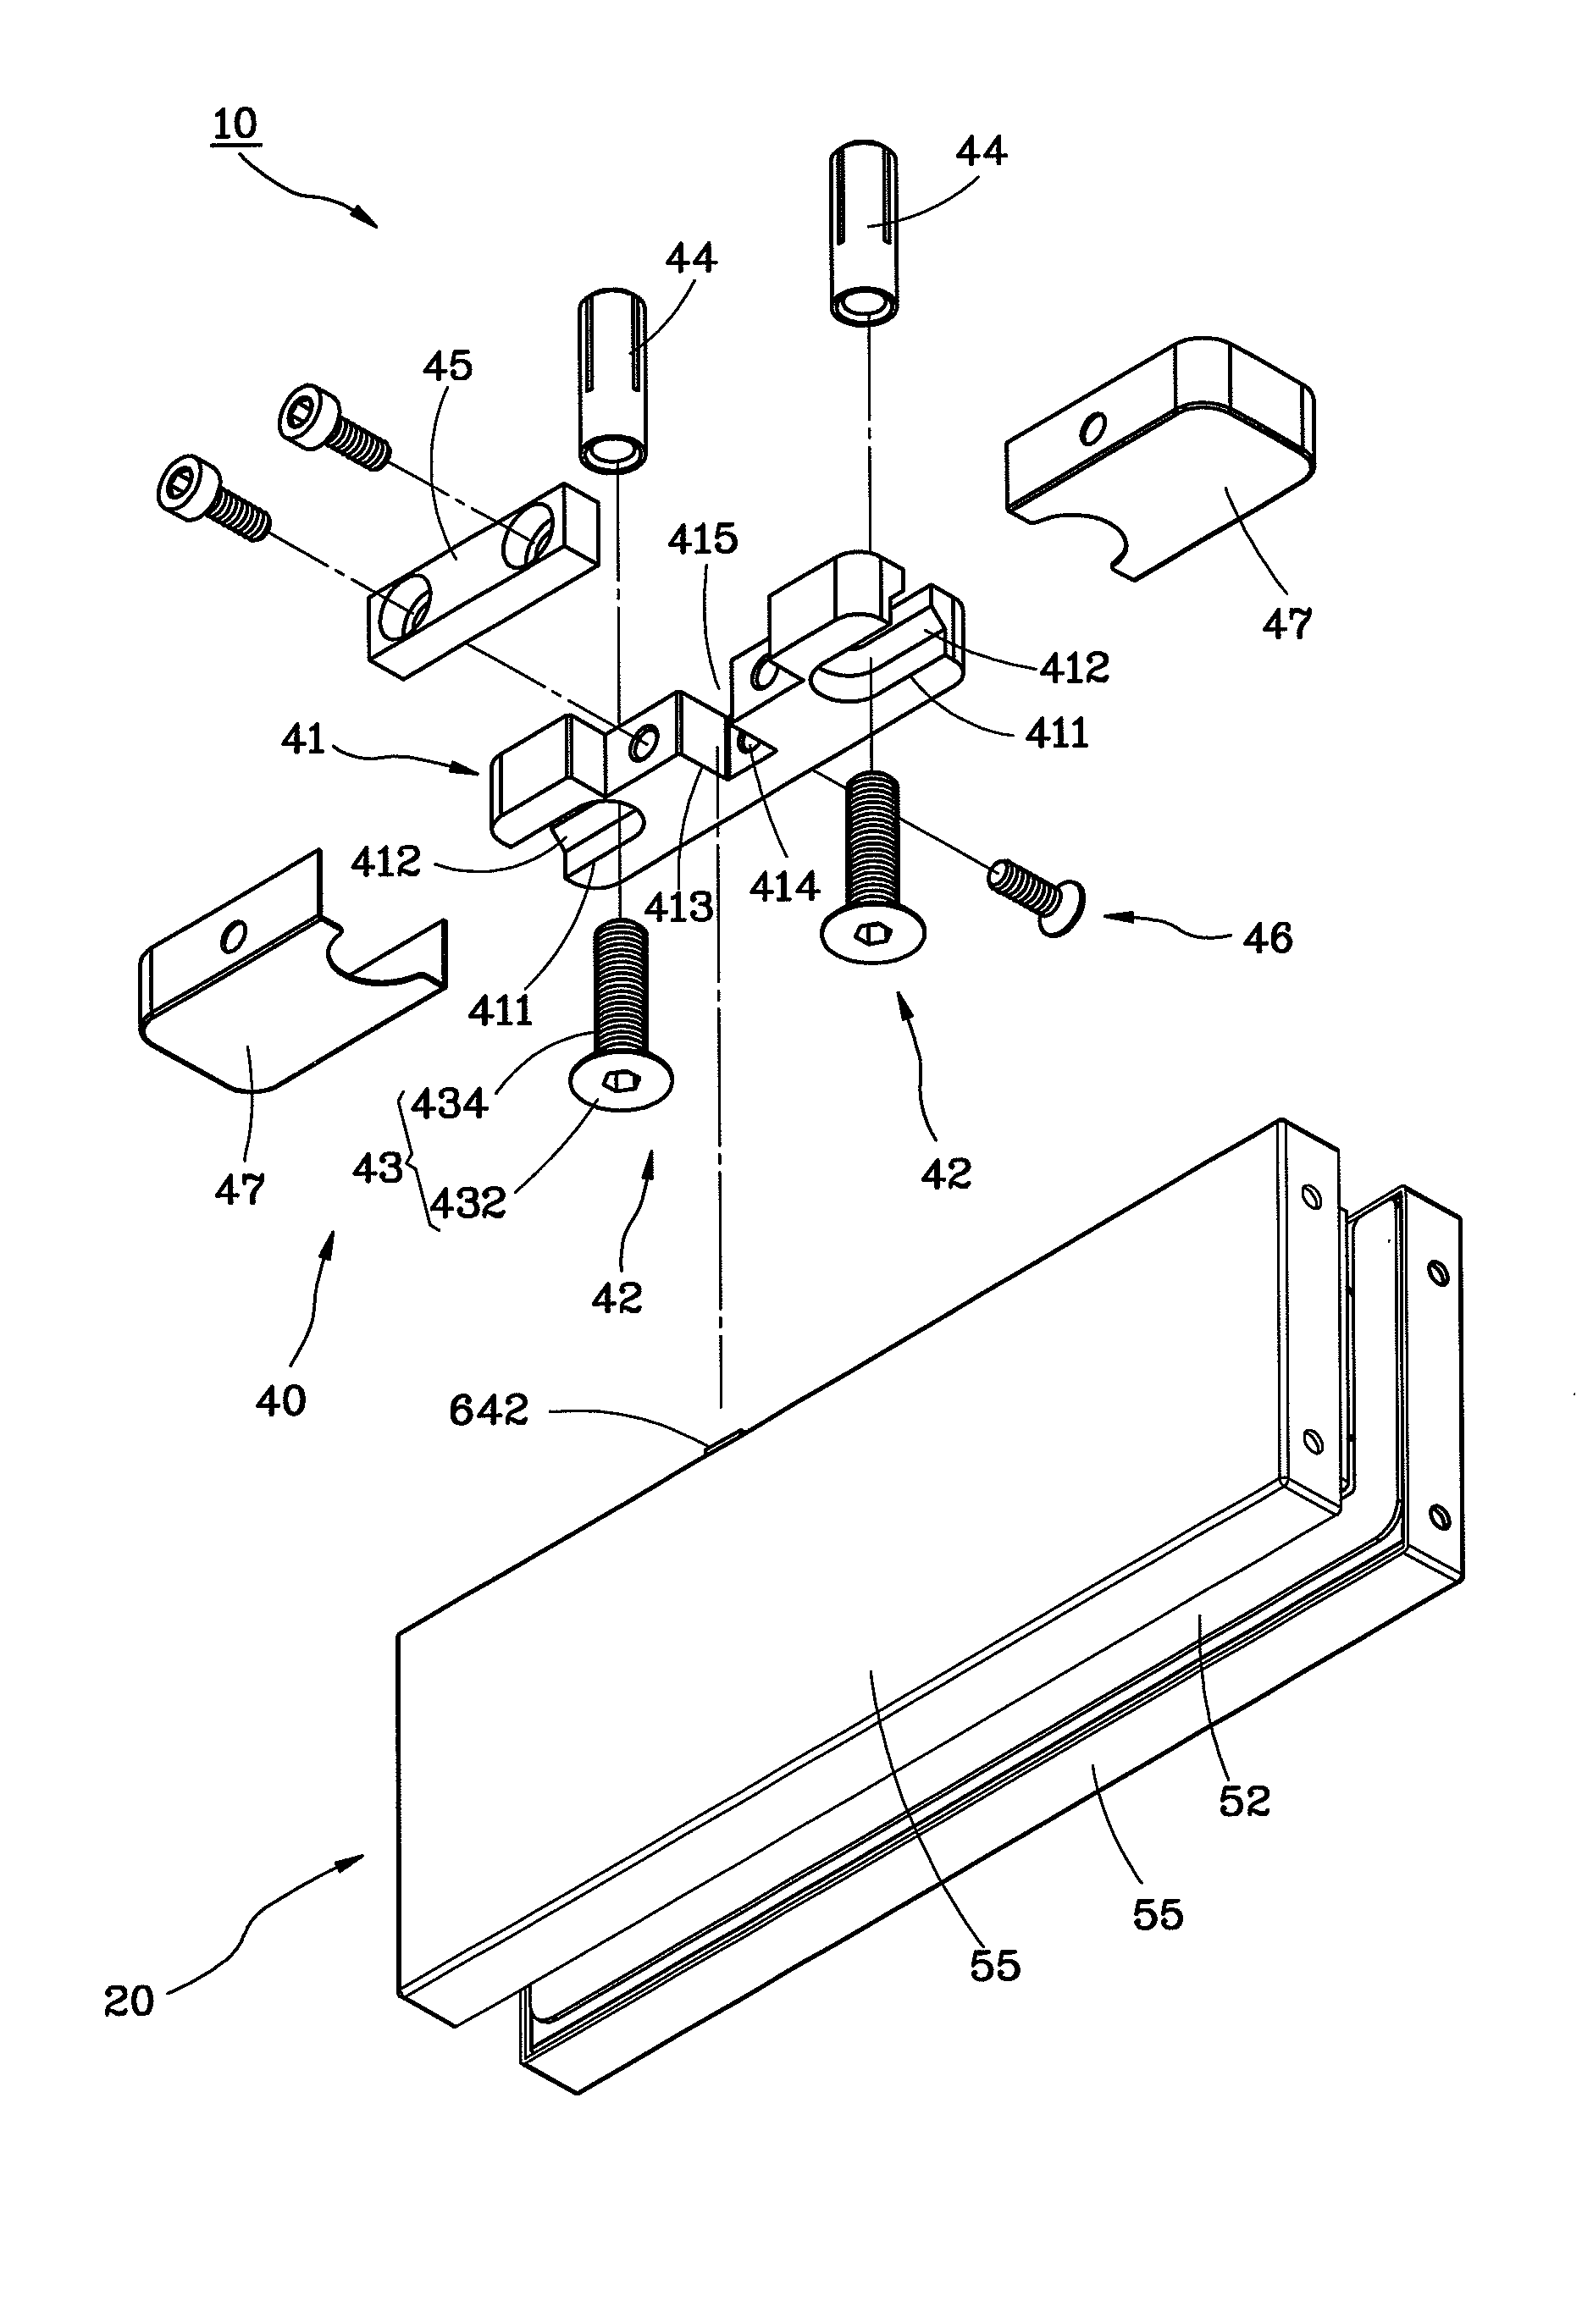 Auto-return apparatus for glass door